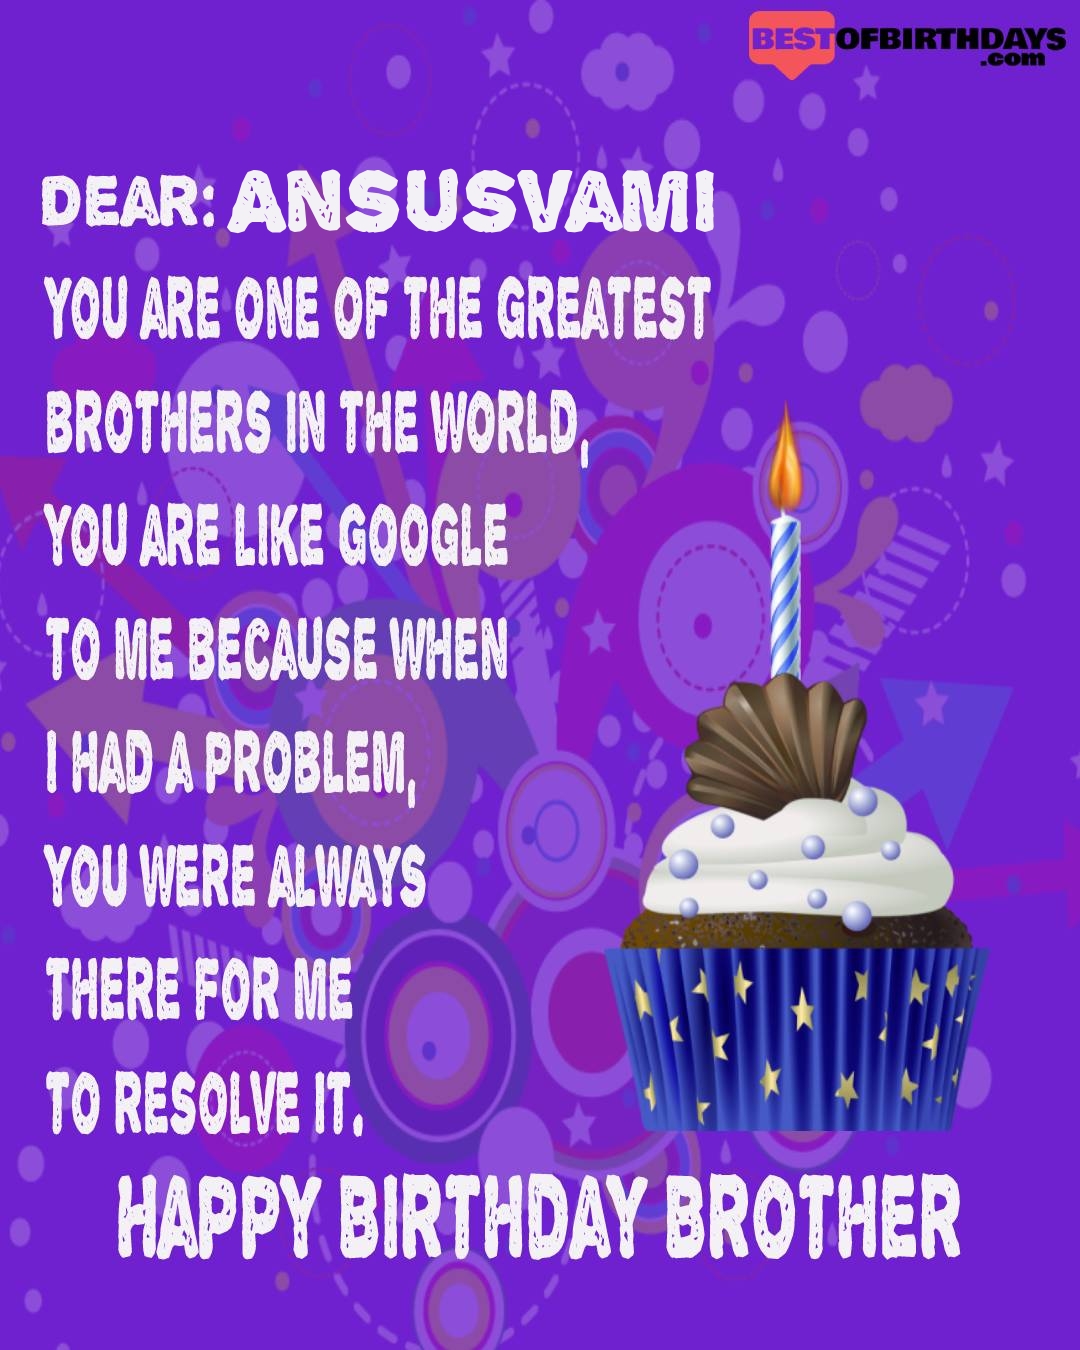 Happy birthday ansusvami bhai brother bro